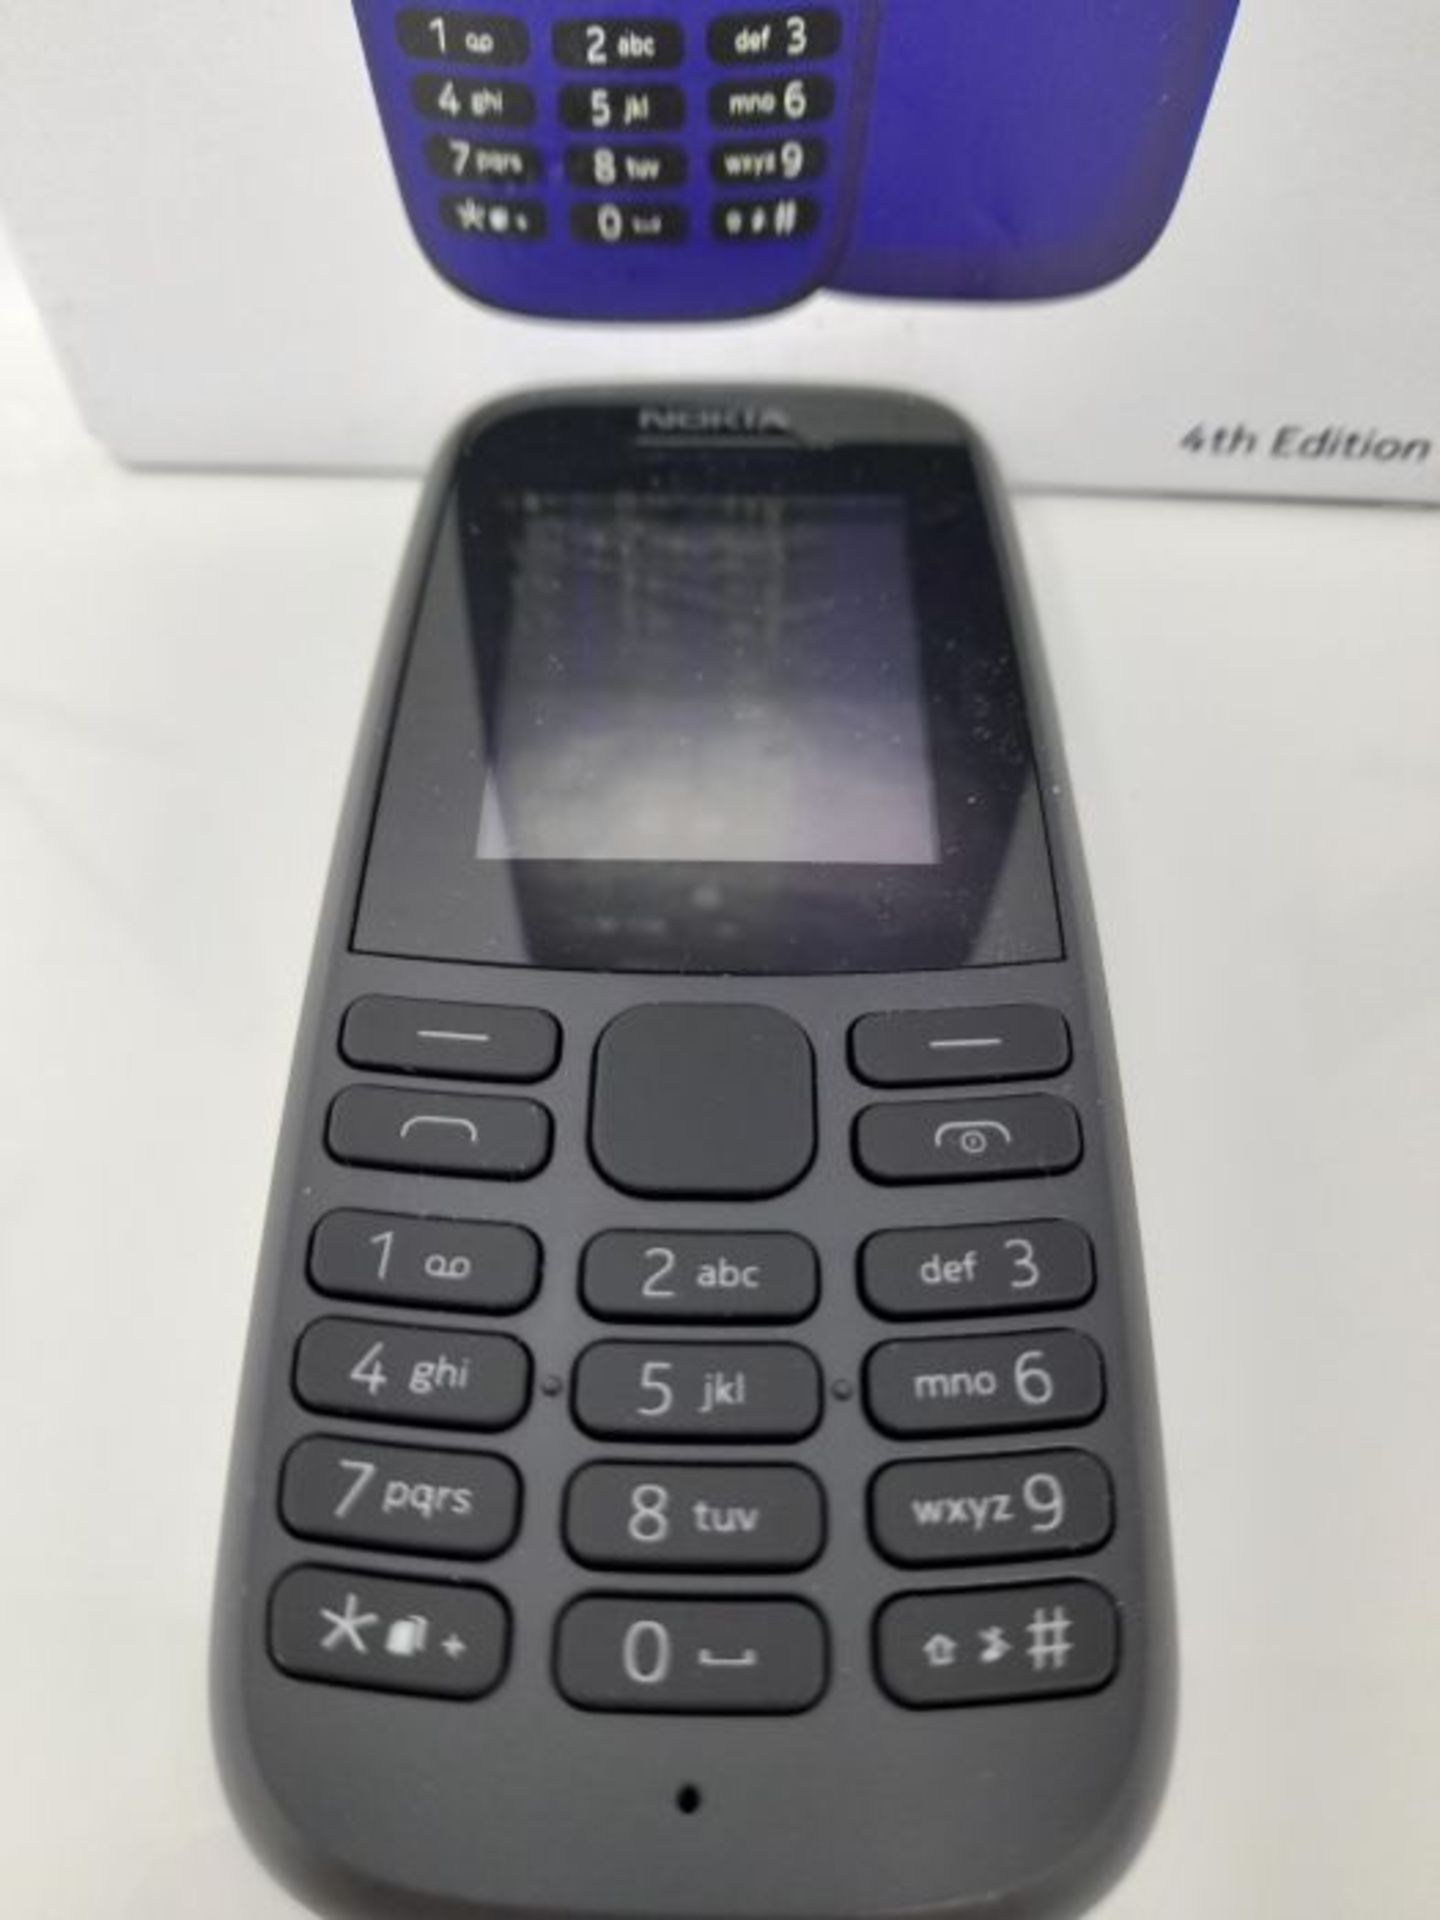 [INCOMPLETE] Nokia 105 2019 Telefono Cellulare Dual Sim, Display 1.77" a Colori, Torci - Image 2 of 2